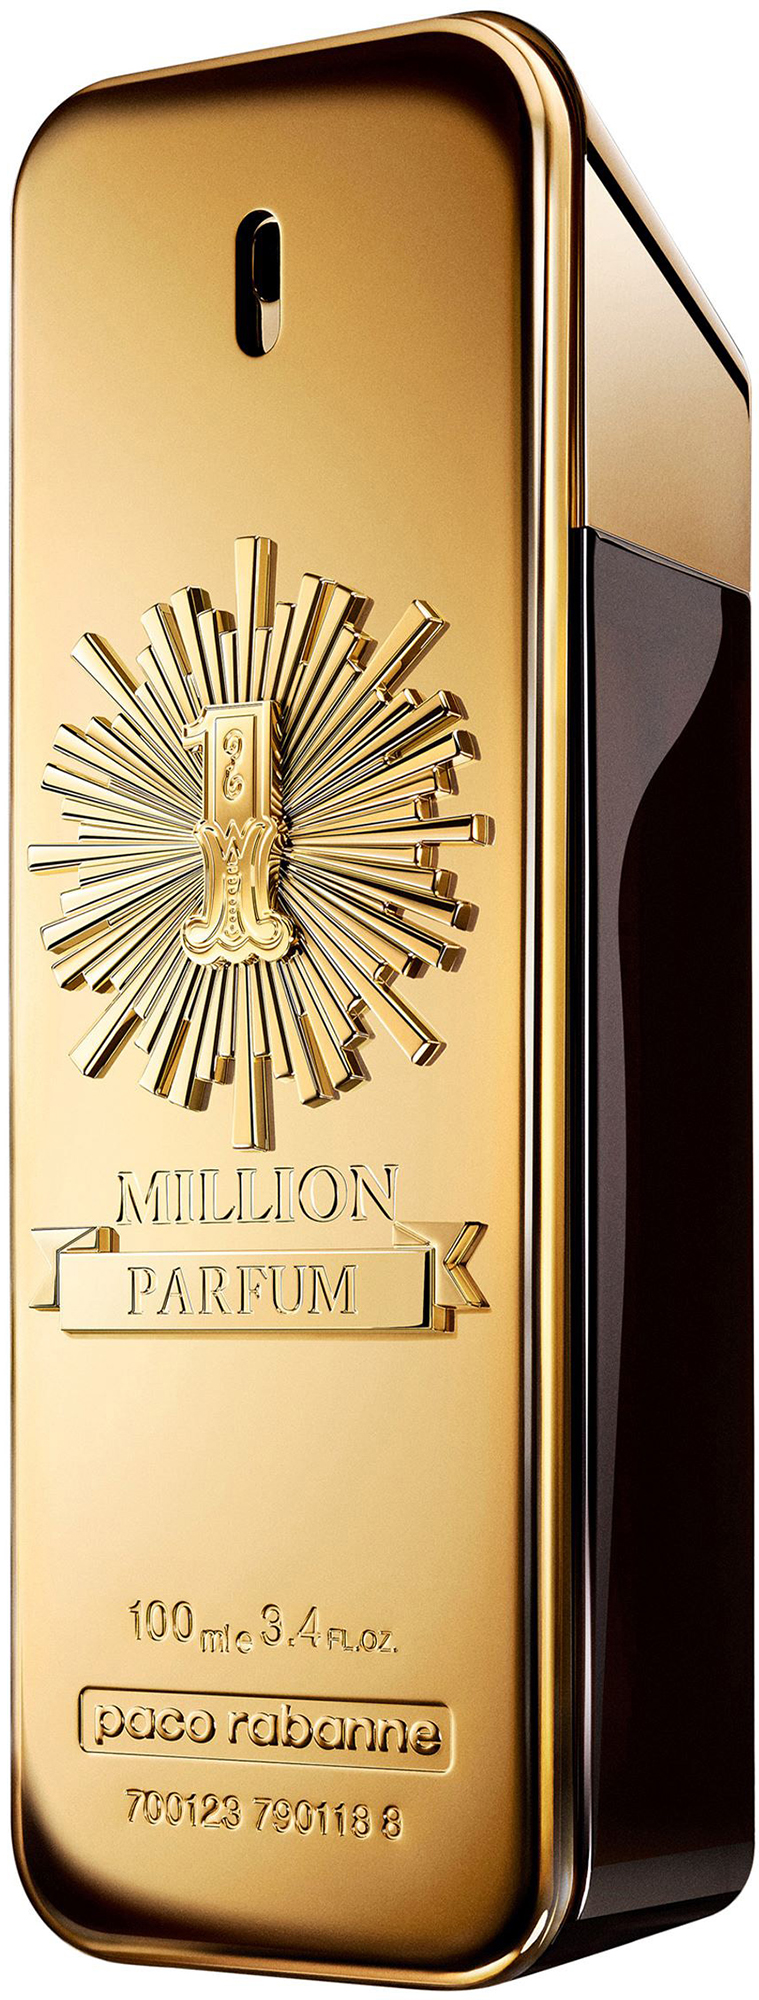 paco rabanne 1 million parfum ekstrakt perfum 100 ml   